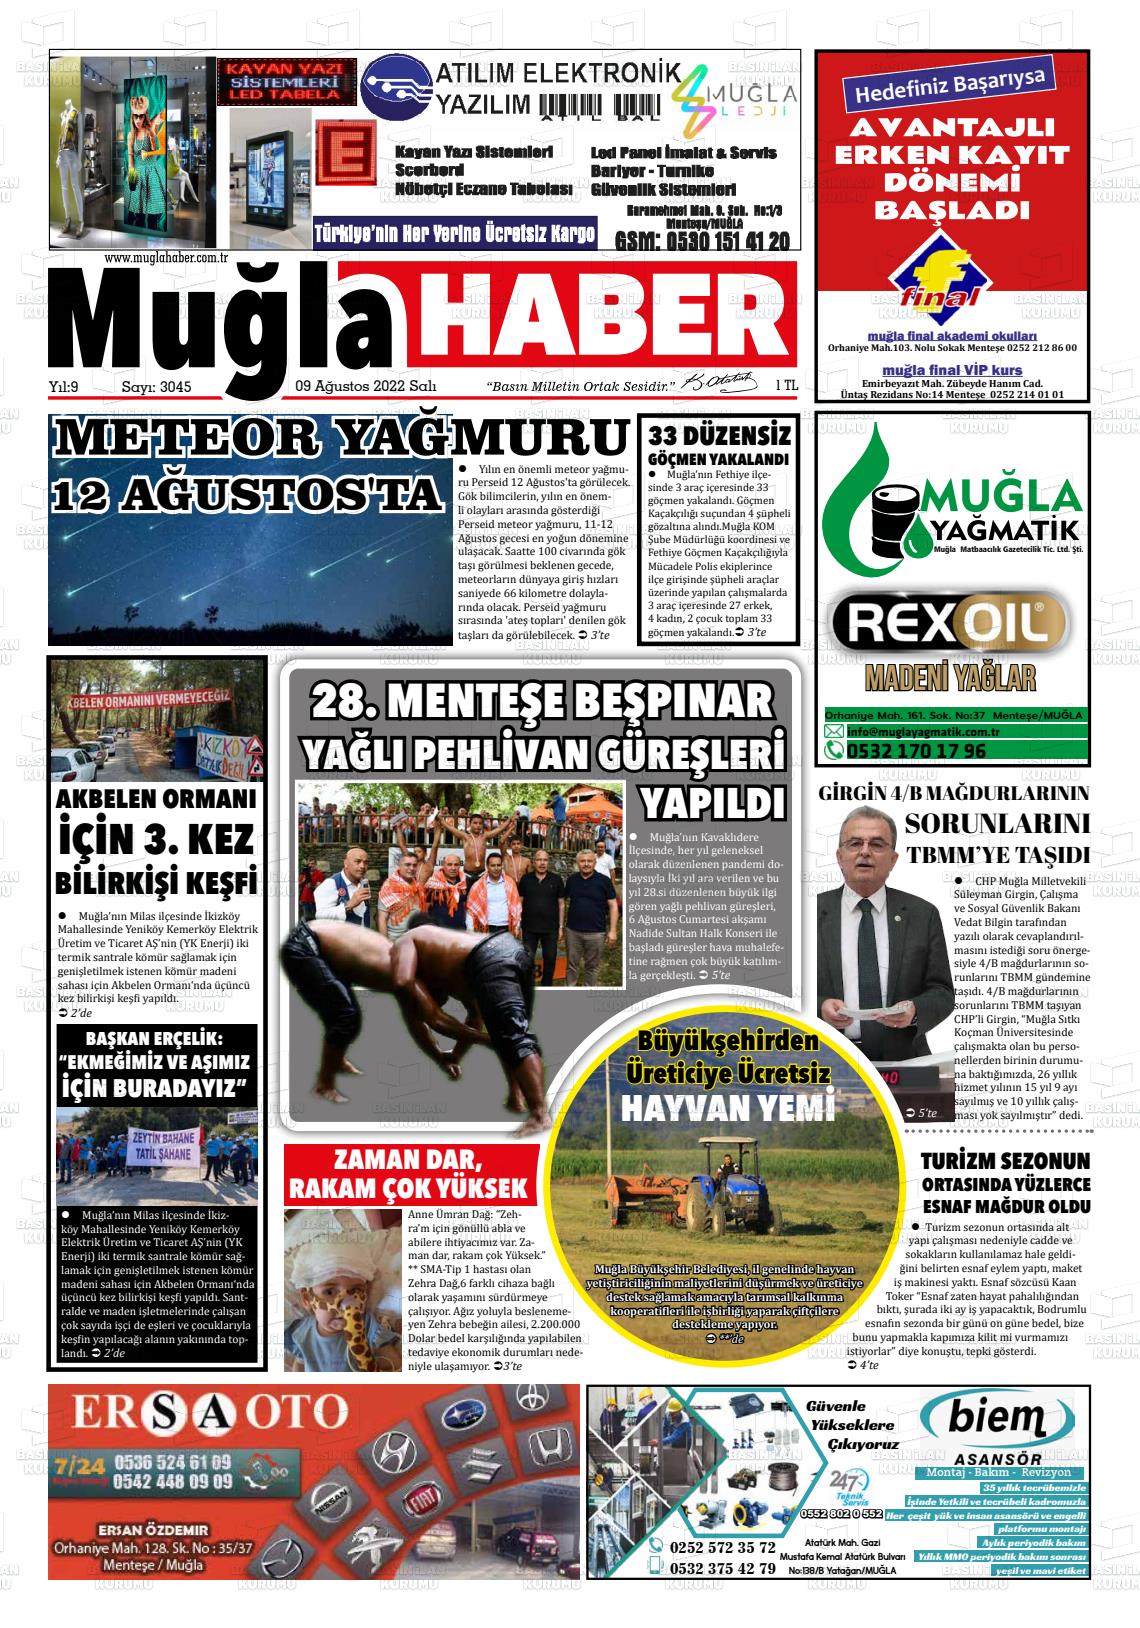 09 Ağustos 2022 Muğla Haber Gazete Manşeti